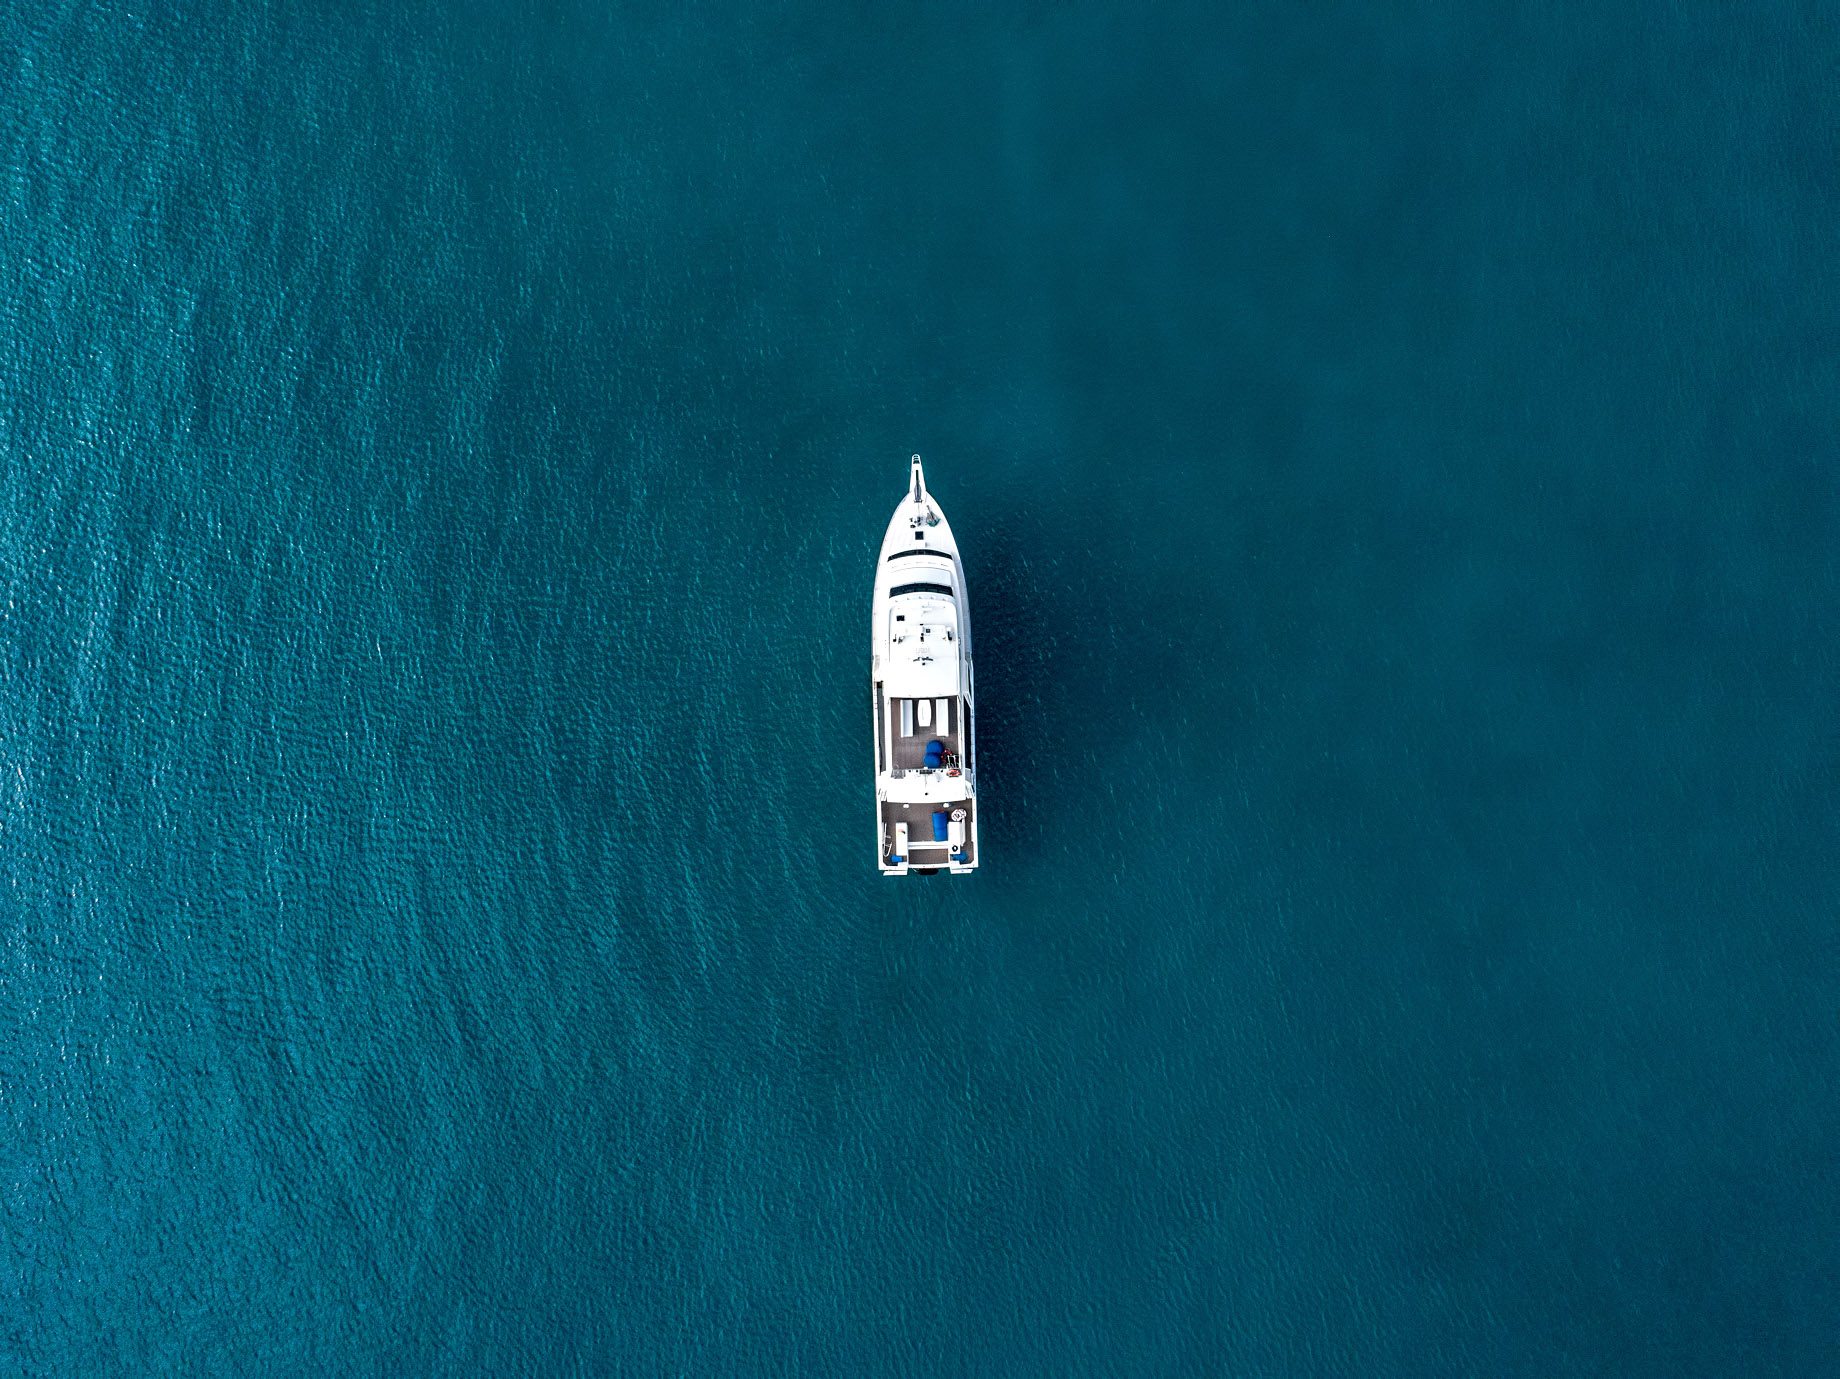 InterContinental Hayman Island Resort – Whitsunday Islands, Australia – Private Boat Charters